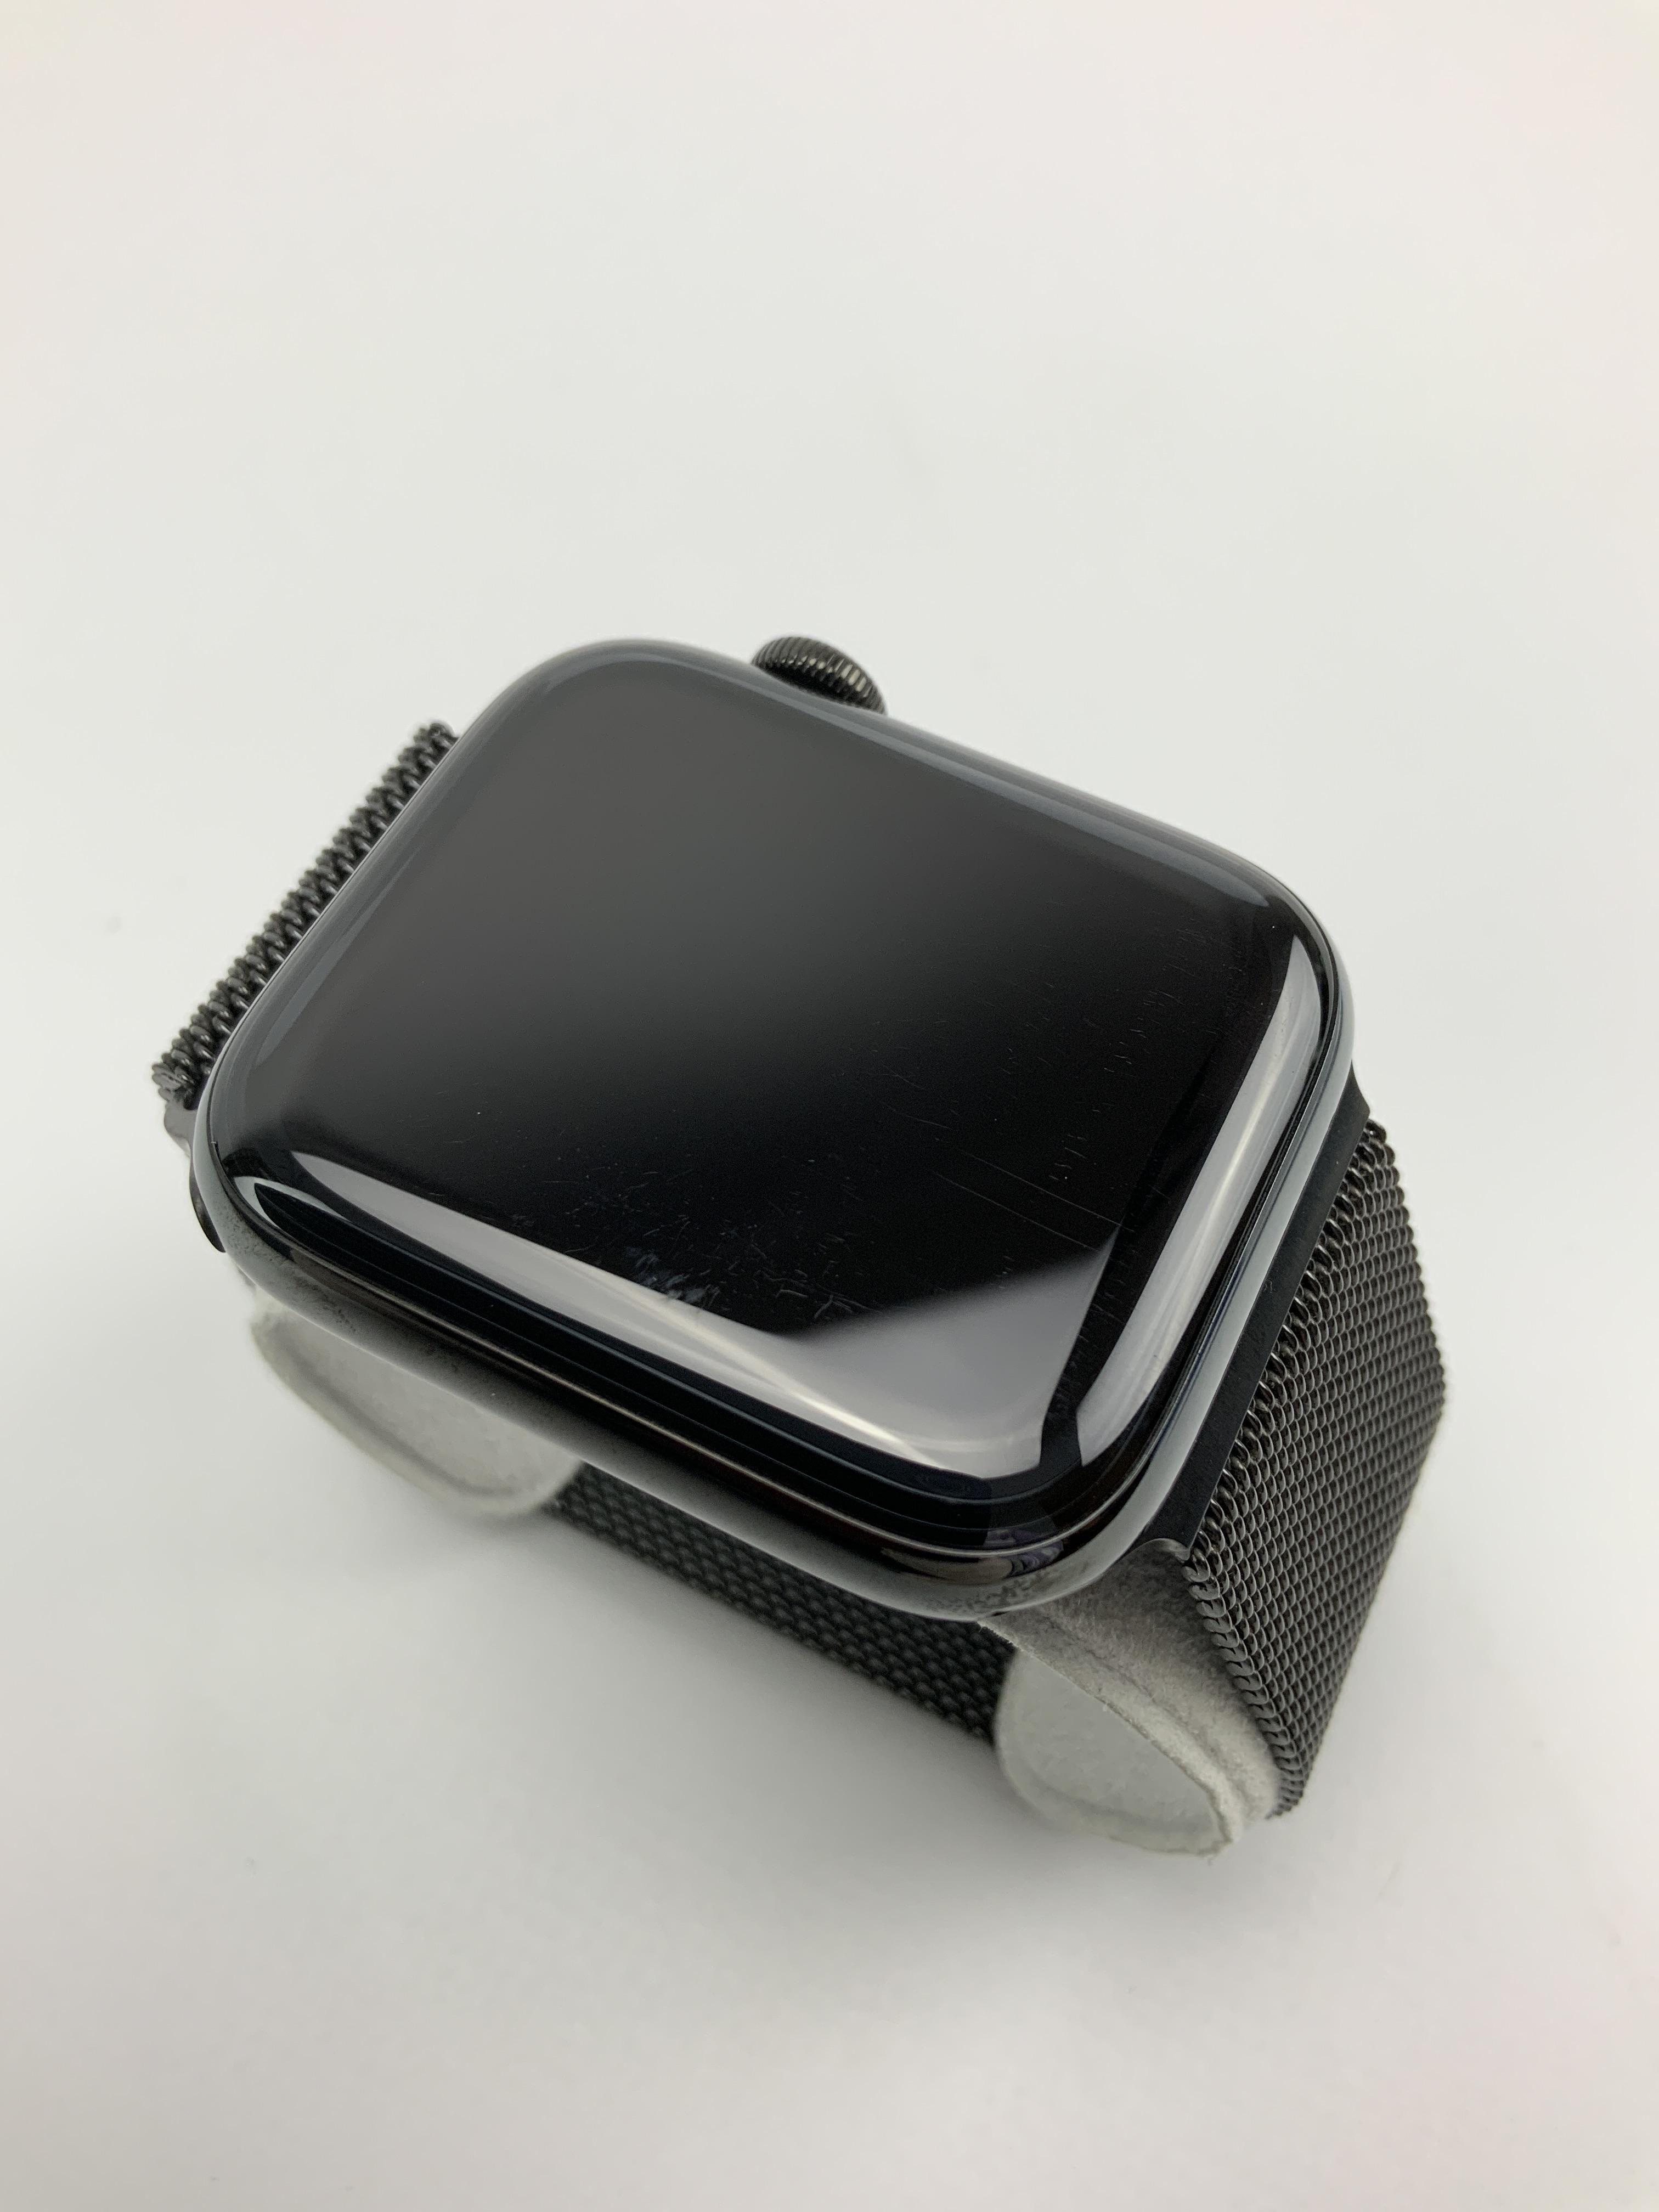 Watch Series 5 Steel Cellular (44mm), Space Black, immagine 3